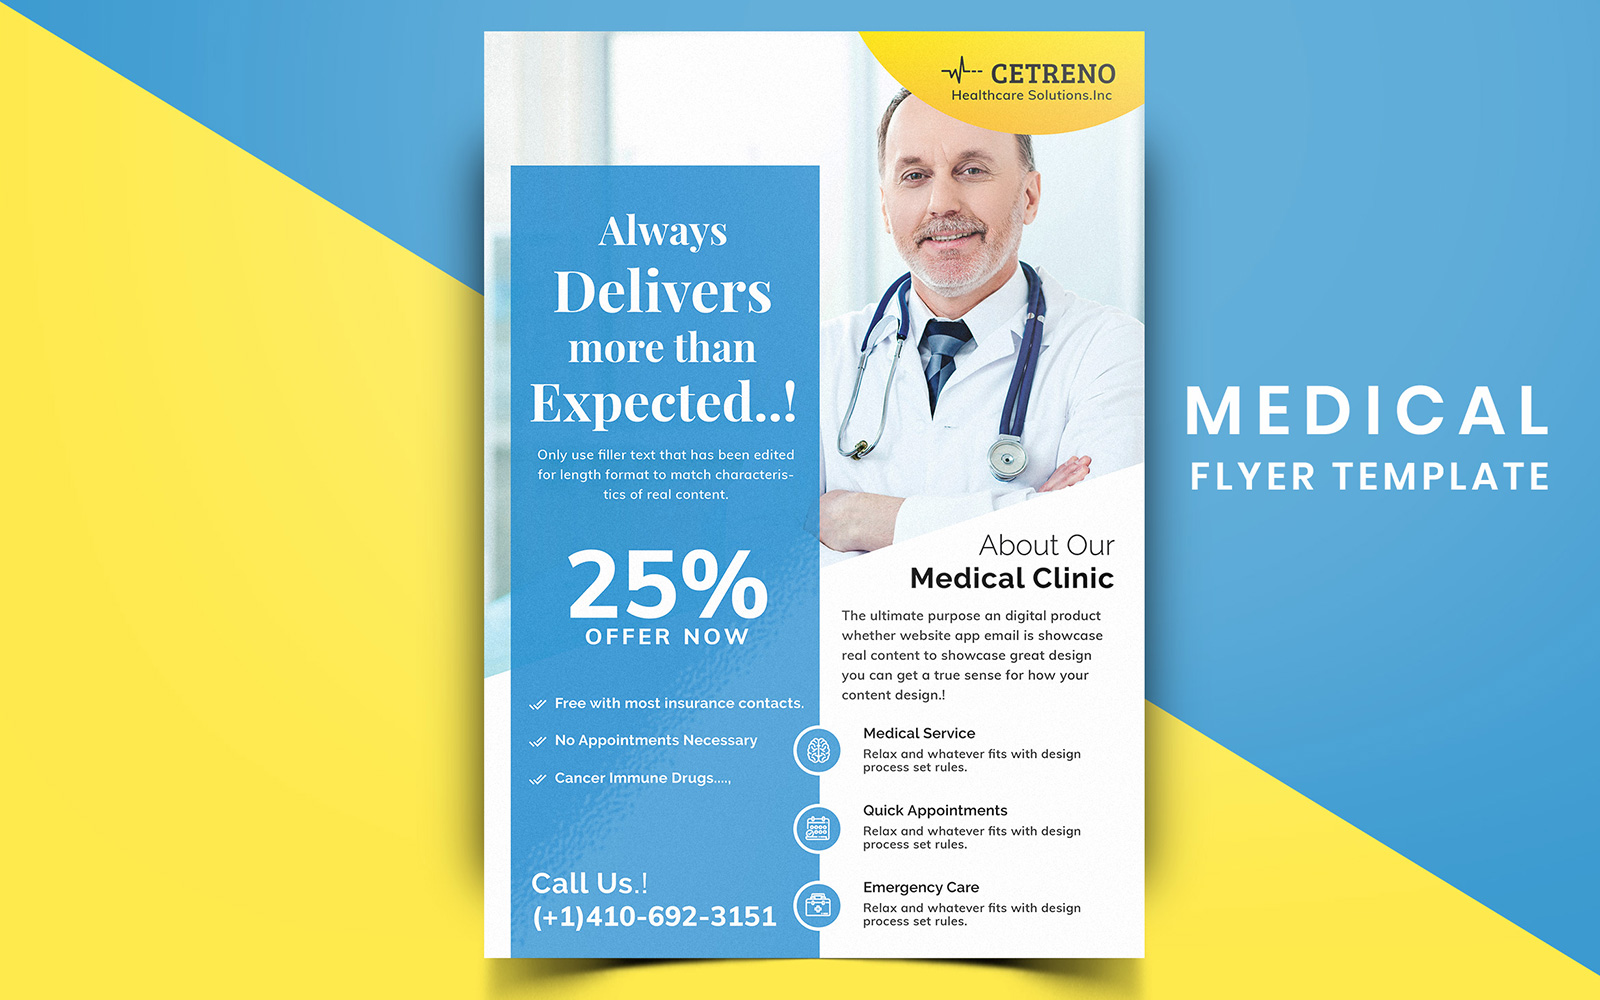 Creak - Medical Flyer Design - Corporate Identity Template